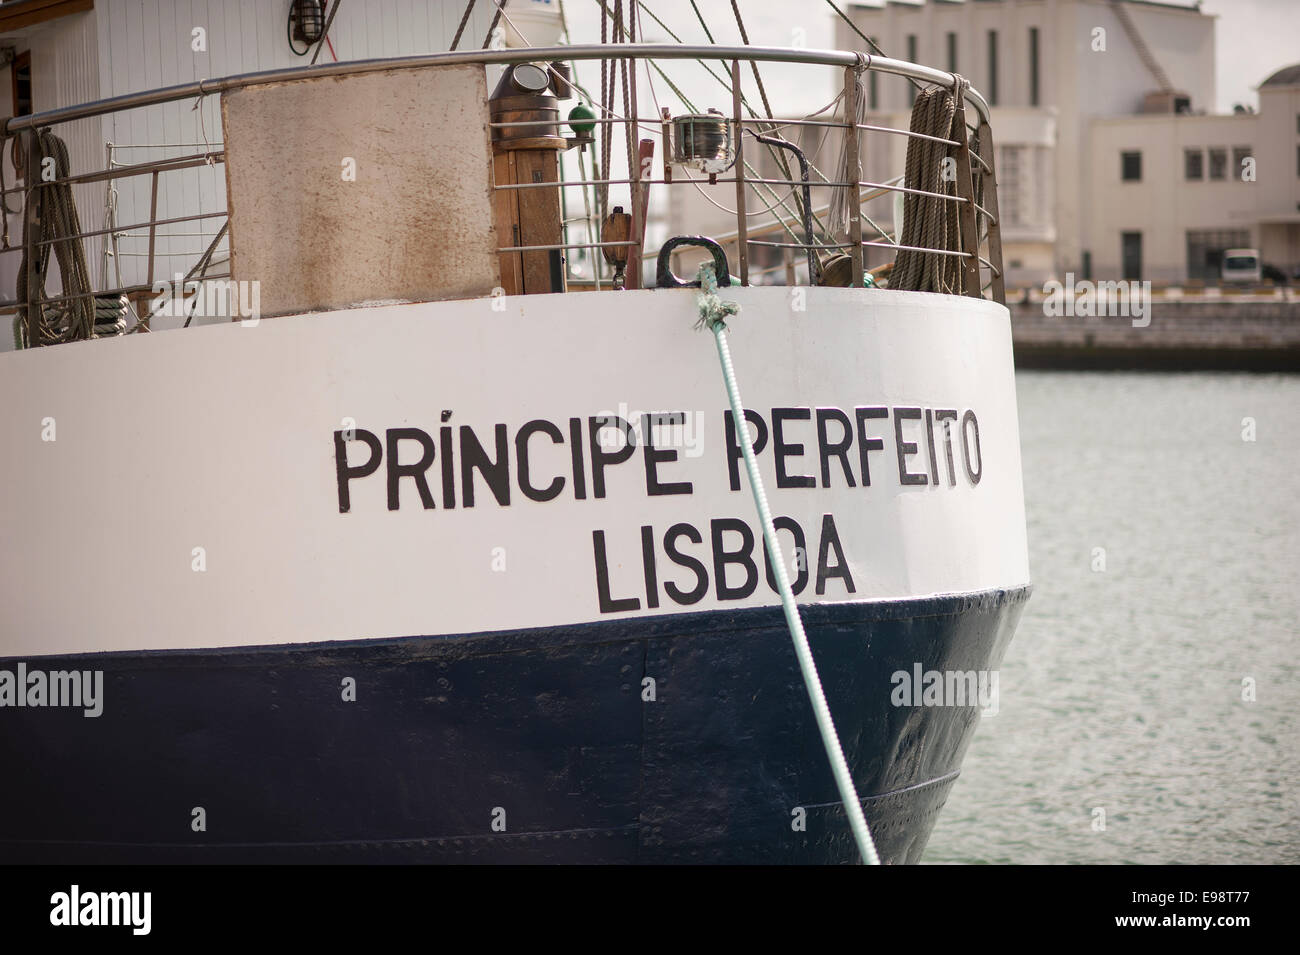 Principe Perfeito, Lisboa. Stock Photo